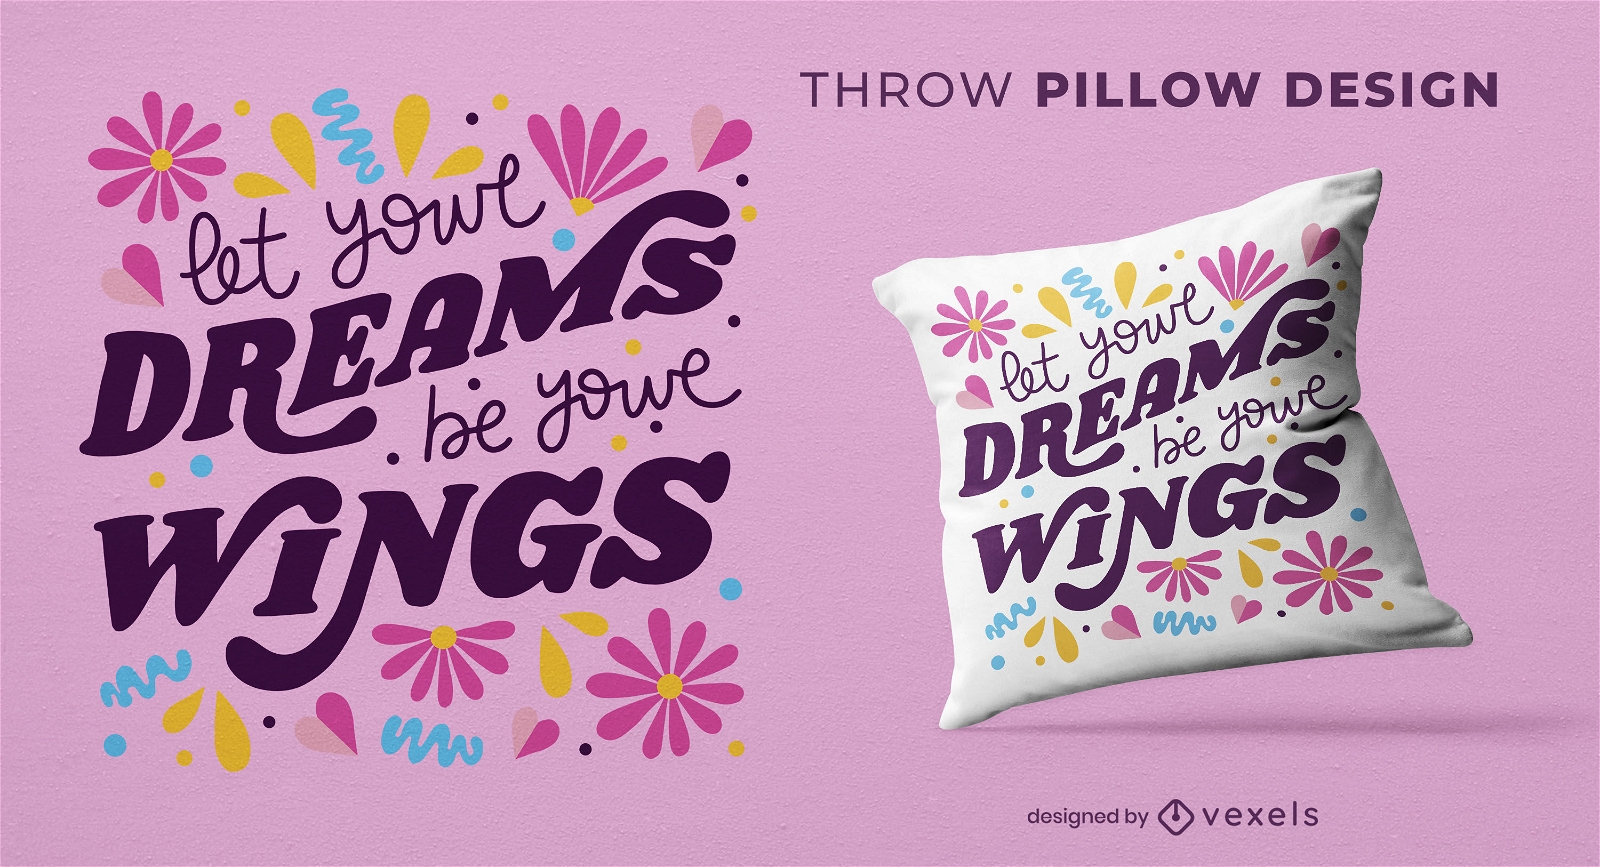 Dreams quote throw pillow design